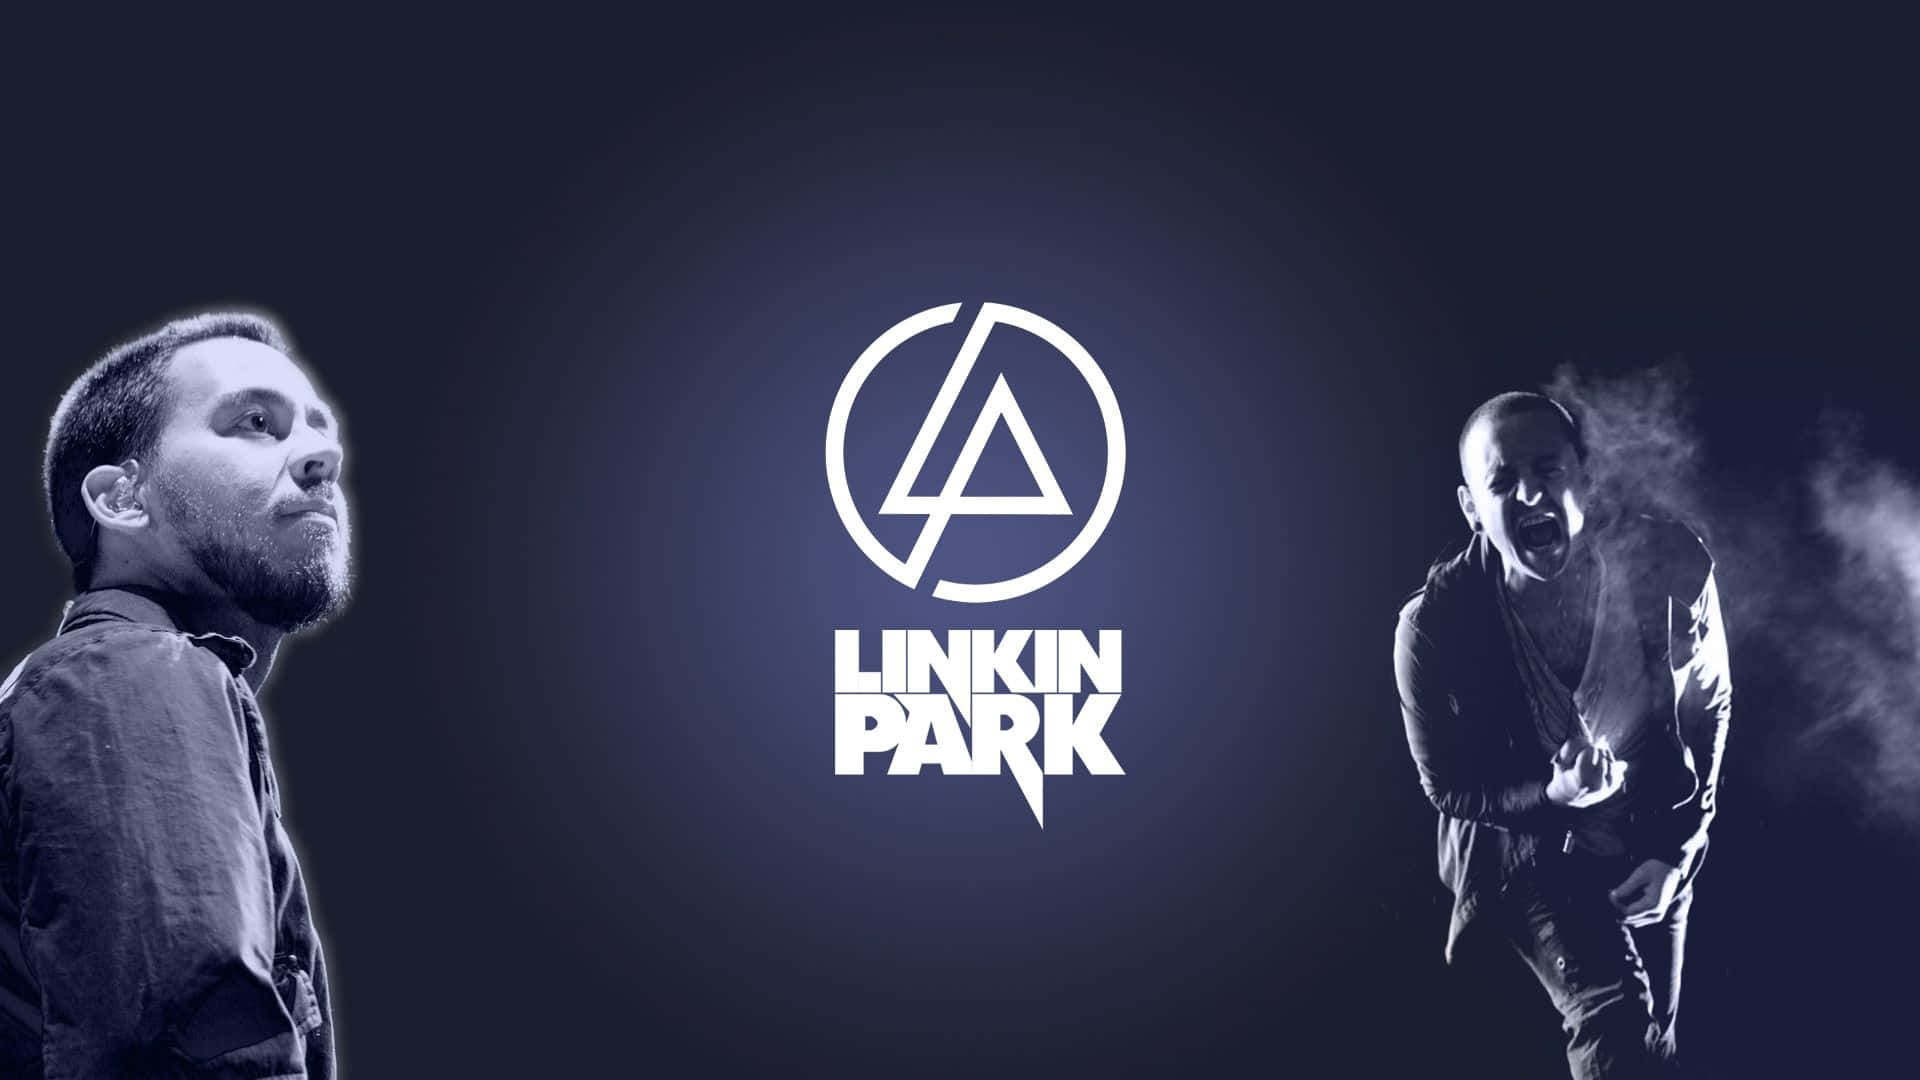 Linkin Park - A Man And A Woman Wallpaper